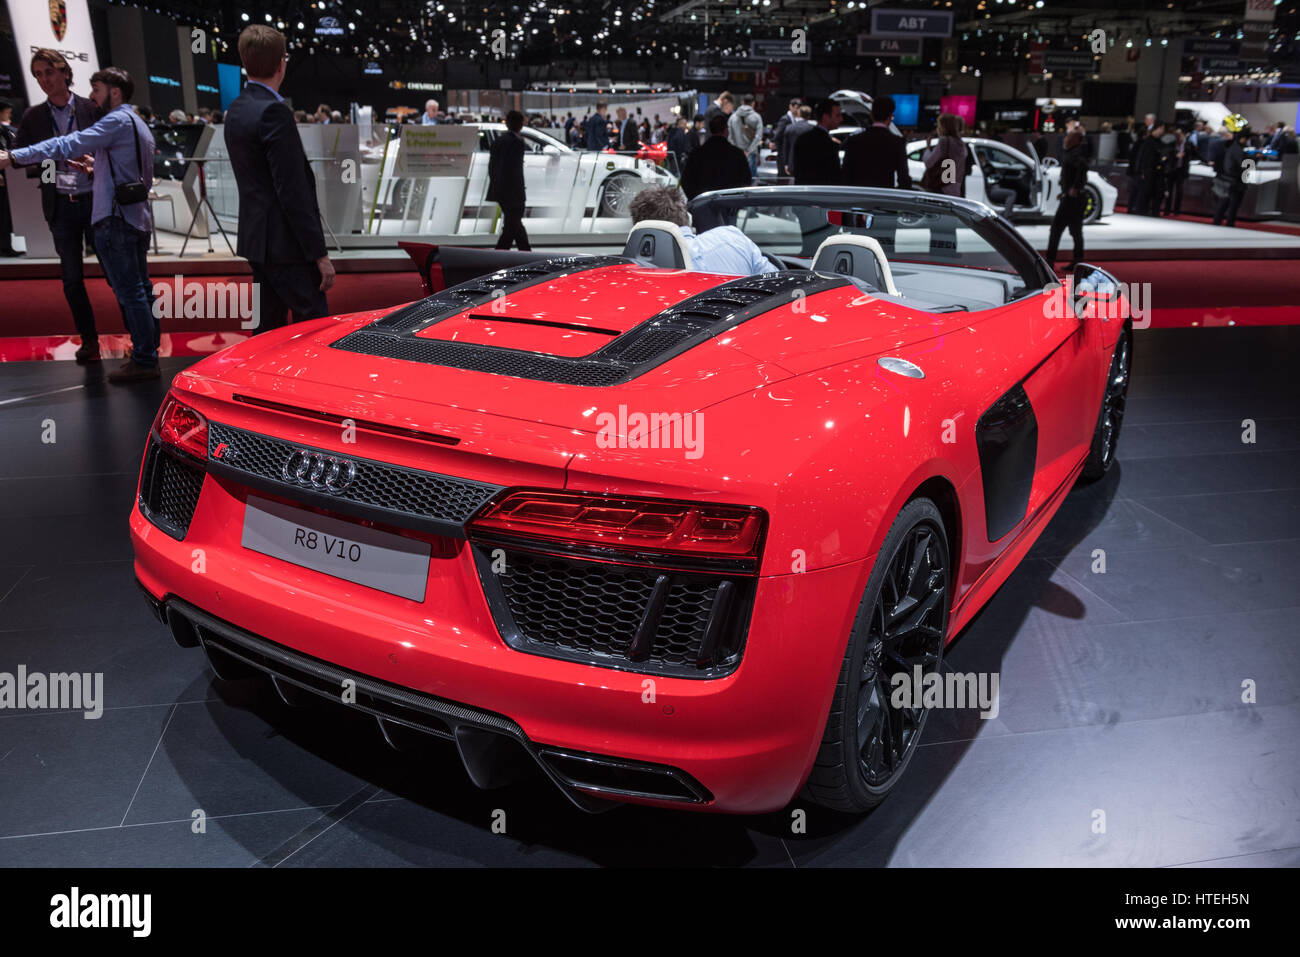 Audi R8 V10 Plus am Genf, Schweiz Internationalen Auto und Motor Show  Stockfotografie - Alamy